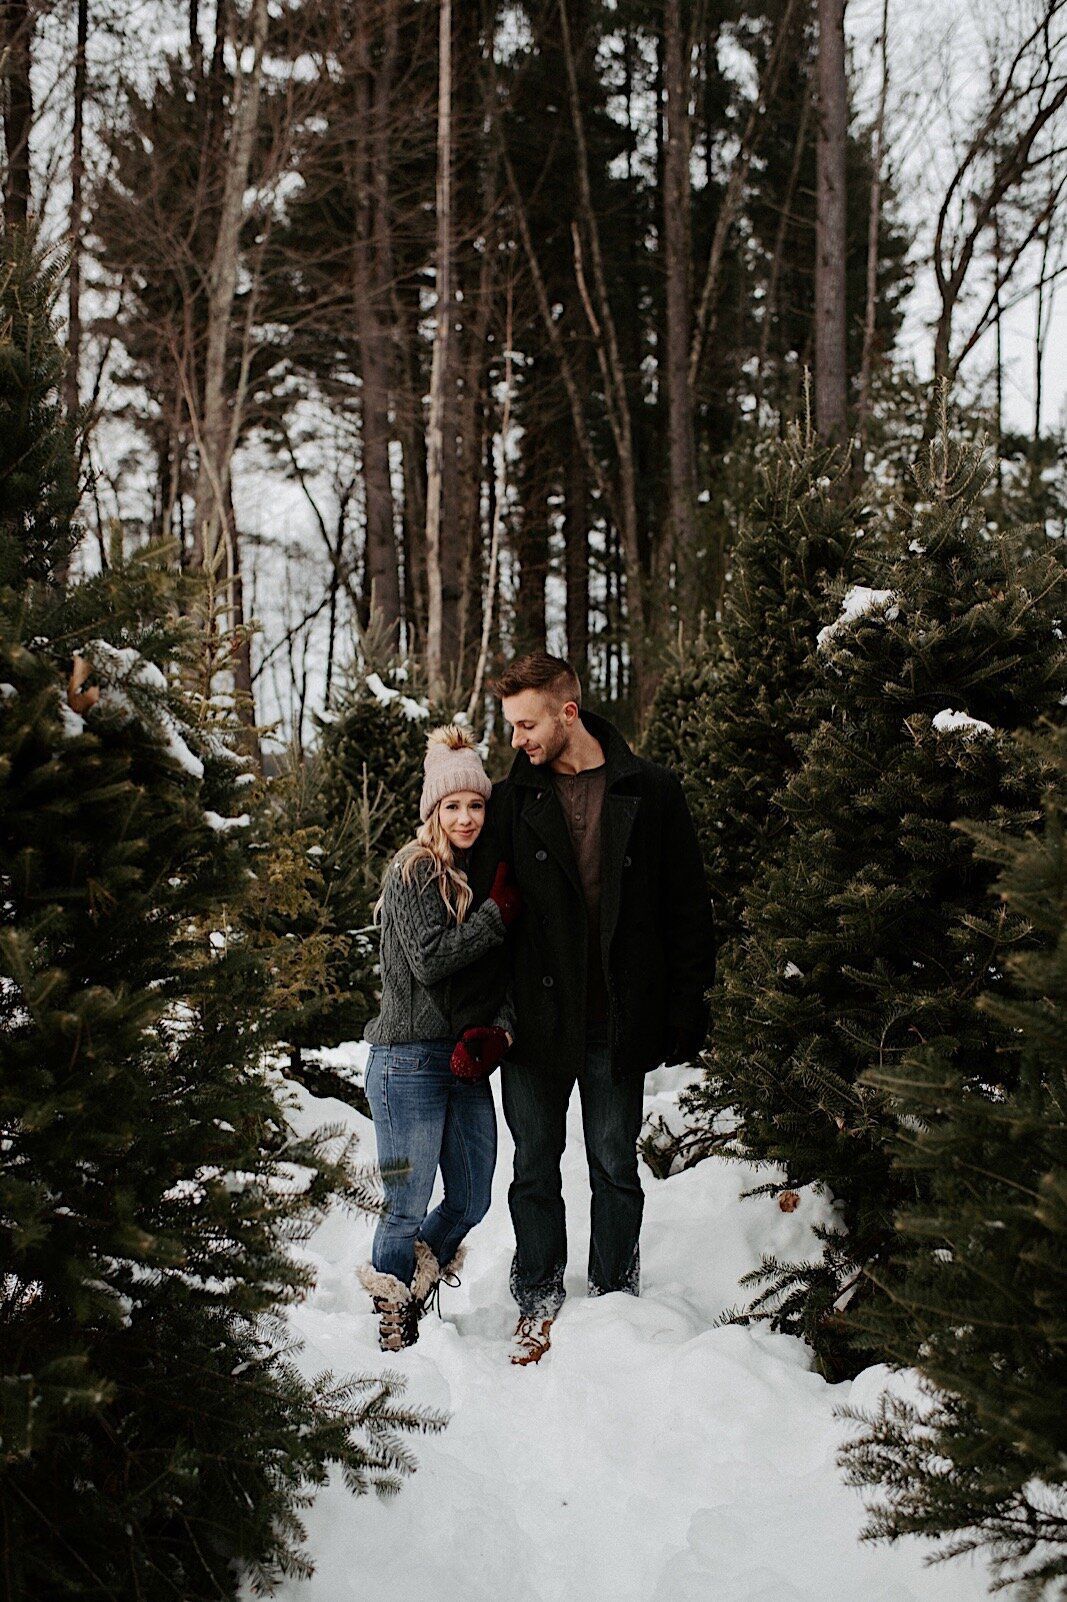 Austyn and Matt's Cozy Christmas Tree Farm Couples Session | Oregon Wedding Photographer — Madeline Rose Photography Co. -   18 christmas photoshoot couples ideas